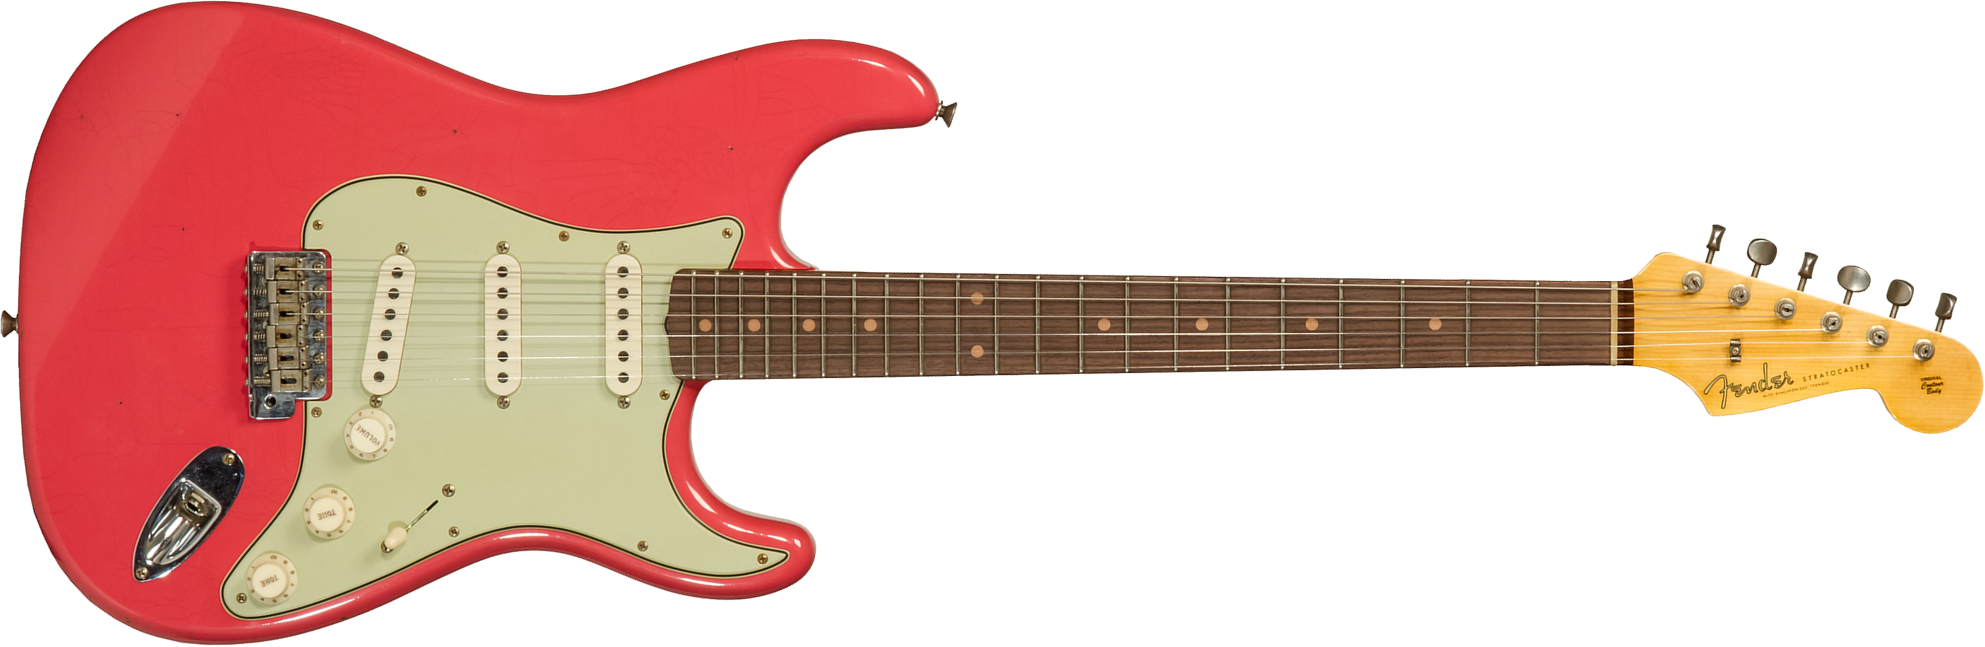 Fender Custom Shop Strat 1959 3s Trem Rw #cz569772 - Journeyman Relic Aged Fiesta Red - Guitarra eléctrica con forma de str. - Main picture